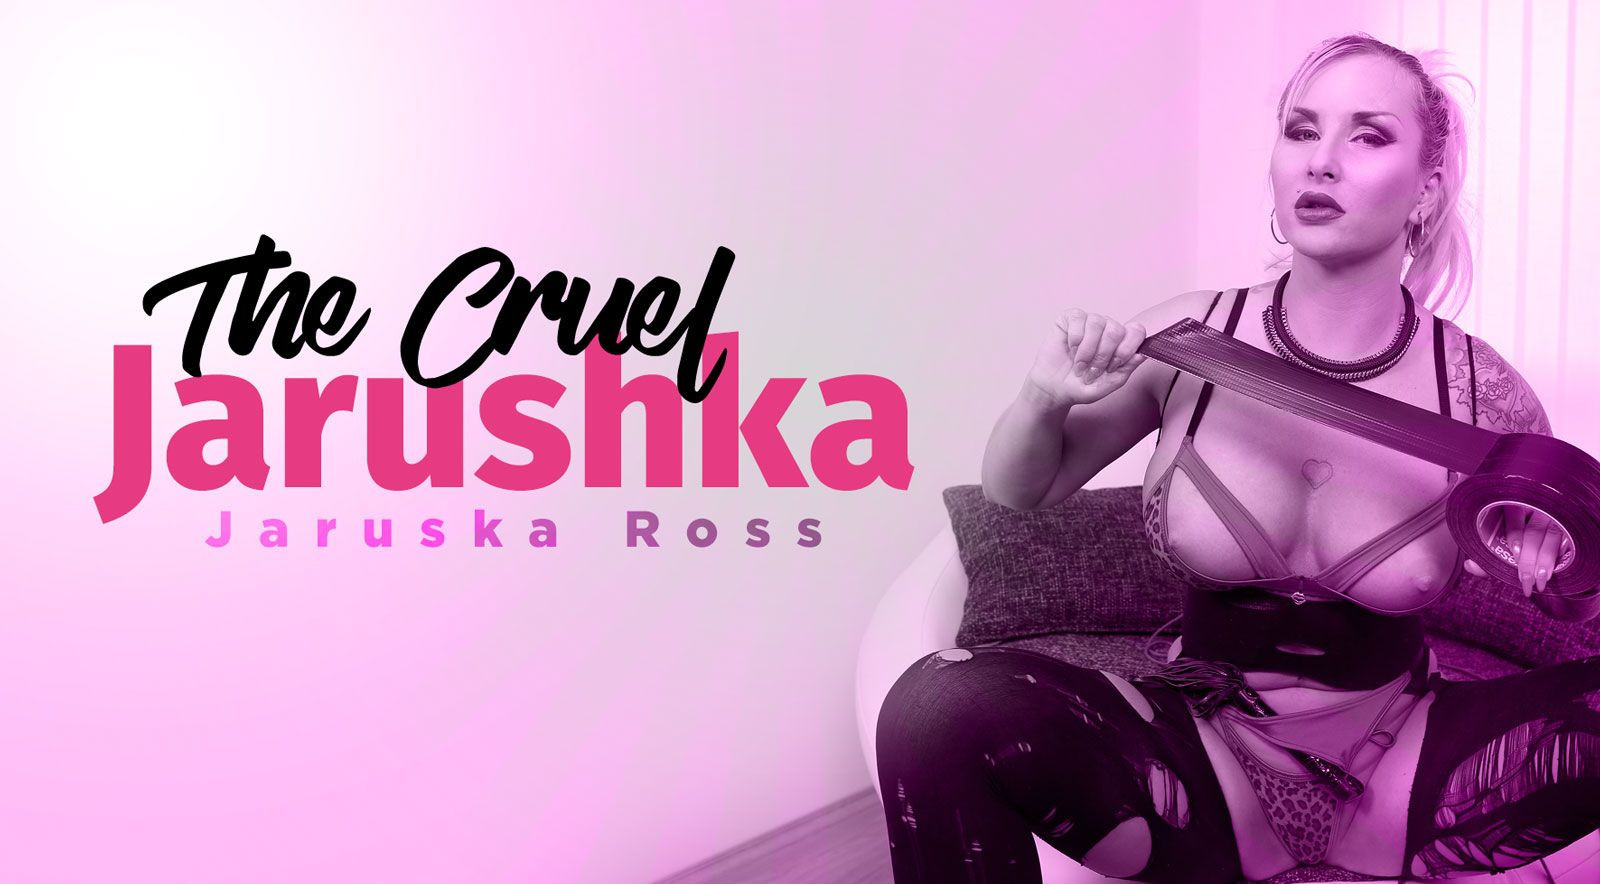 The Cruel Jarushka: Jarushka Ross Slideshow